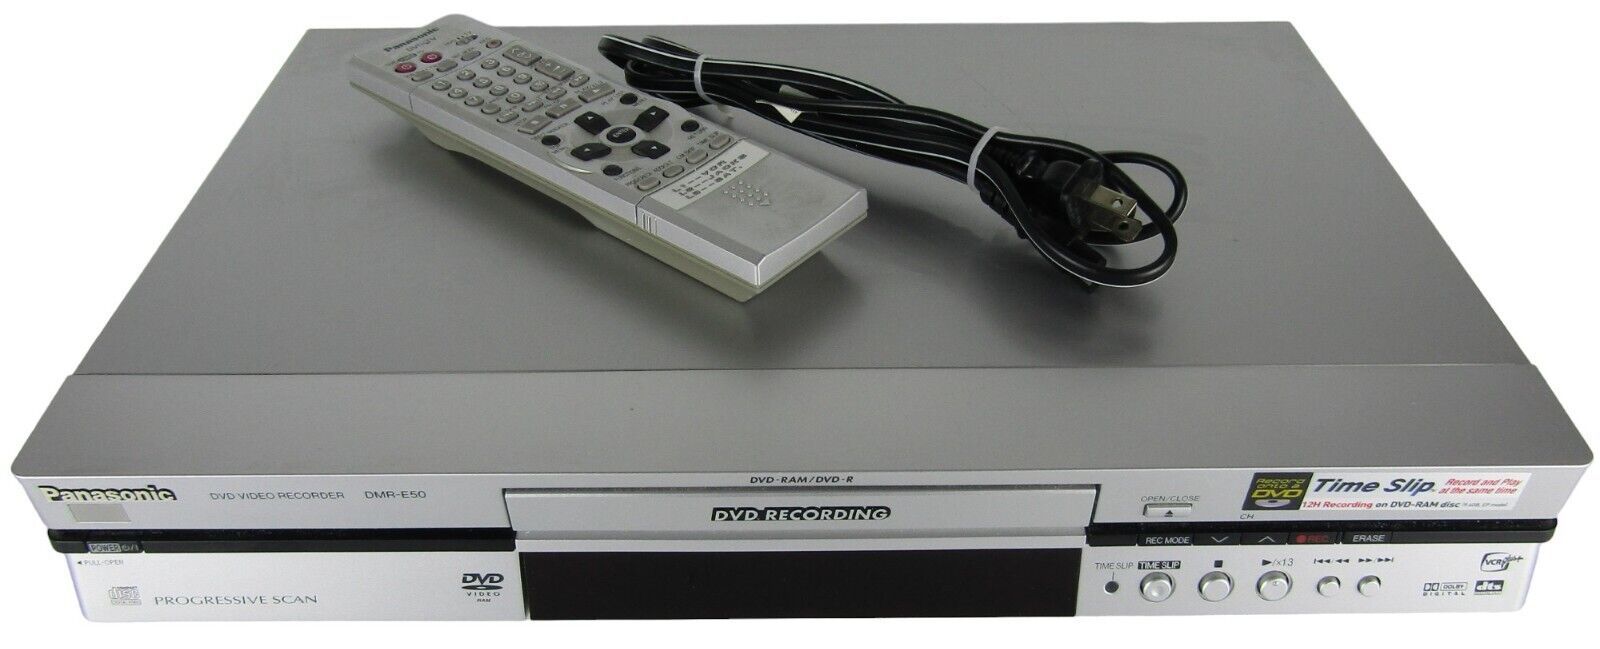 Panasonic DMR-E50 DVD Recorder w/ Progressive Scan Playback DVD-RAM DVD-R Tested - $96.74